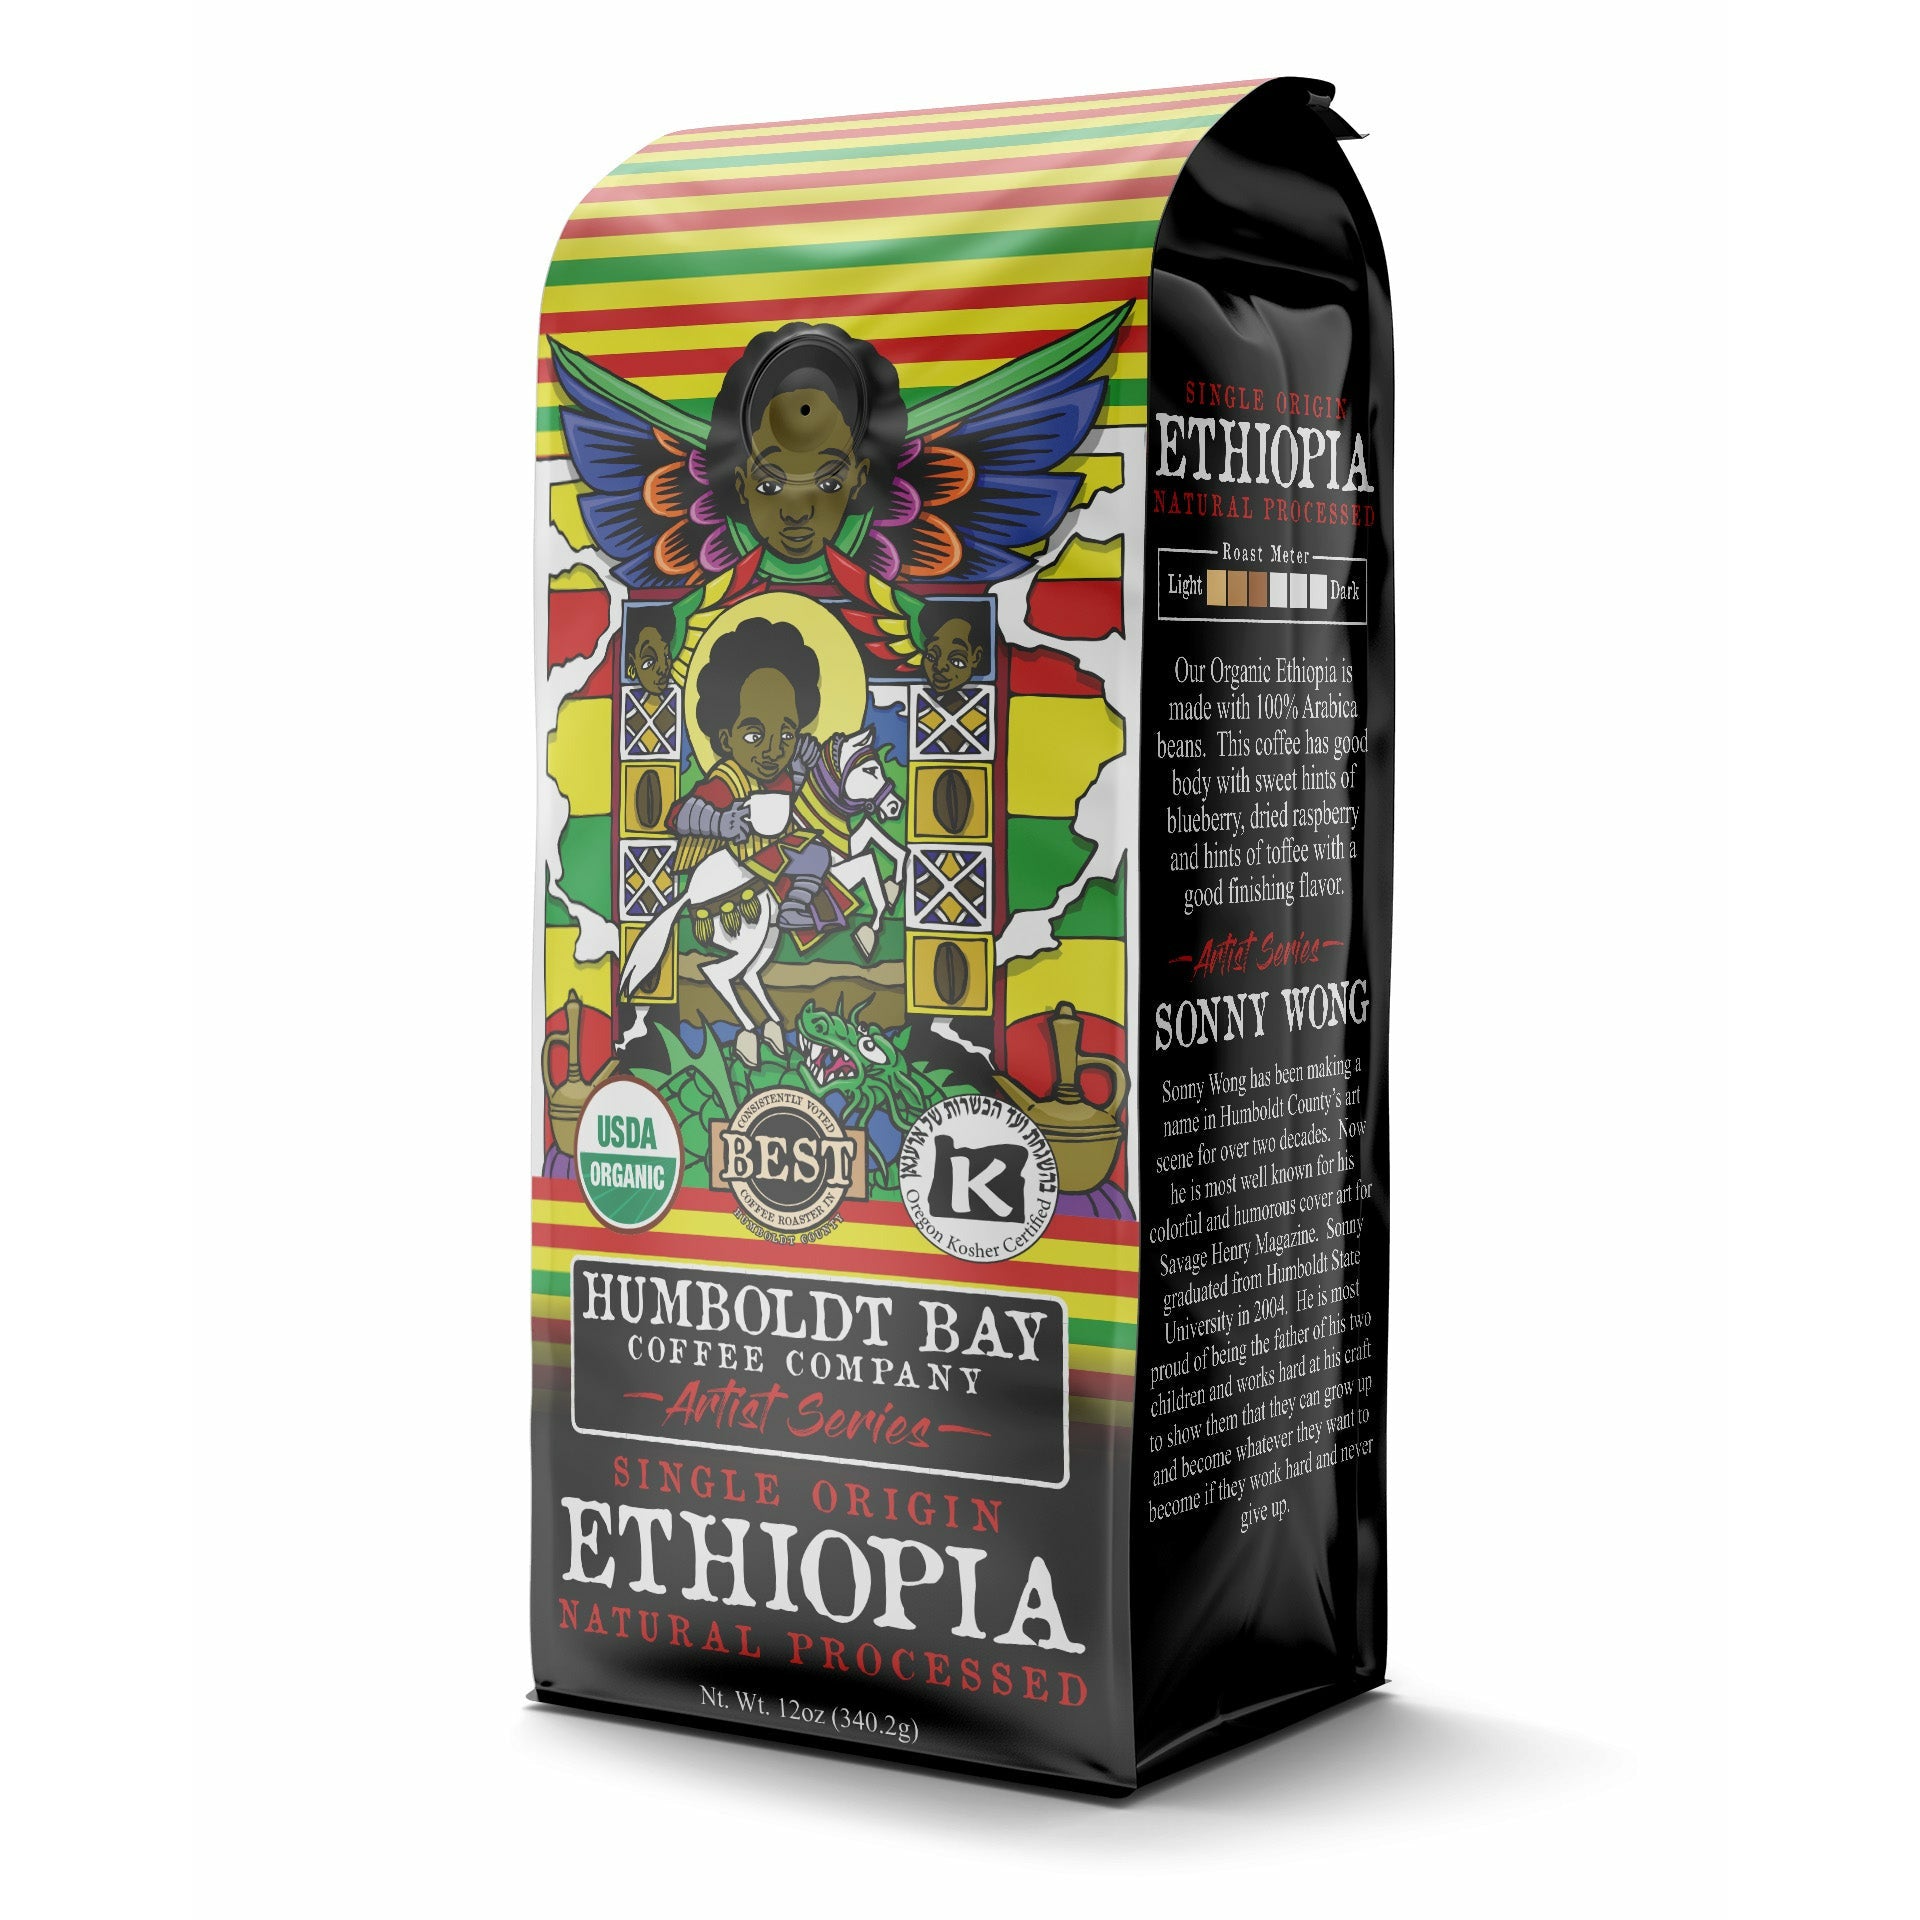 Organic Ethiopia - Humboldt Bay Coffee Co.